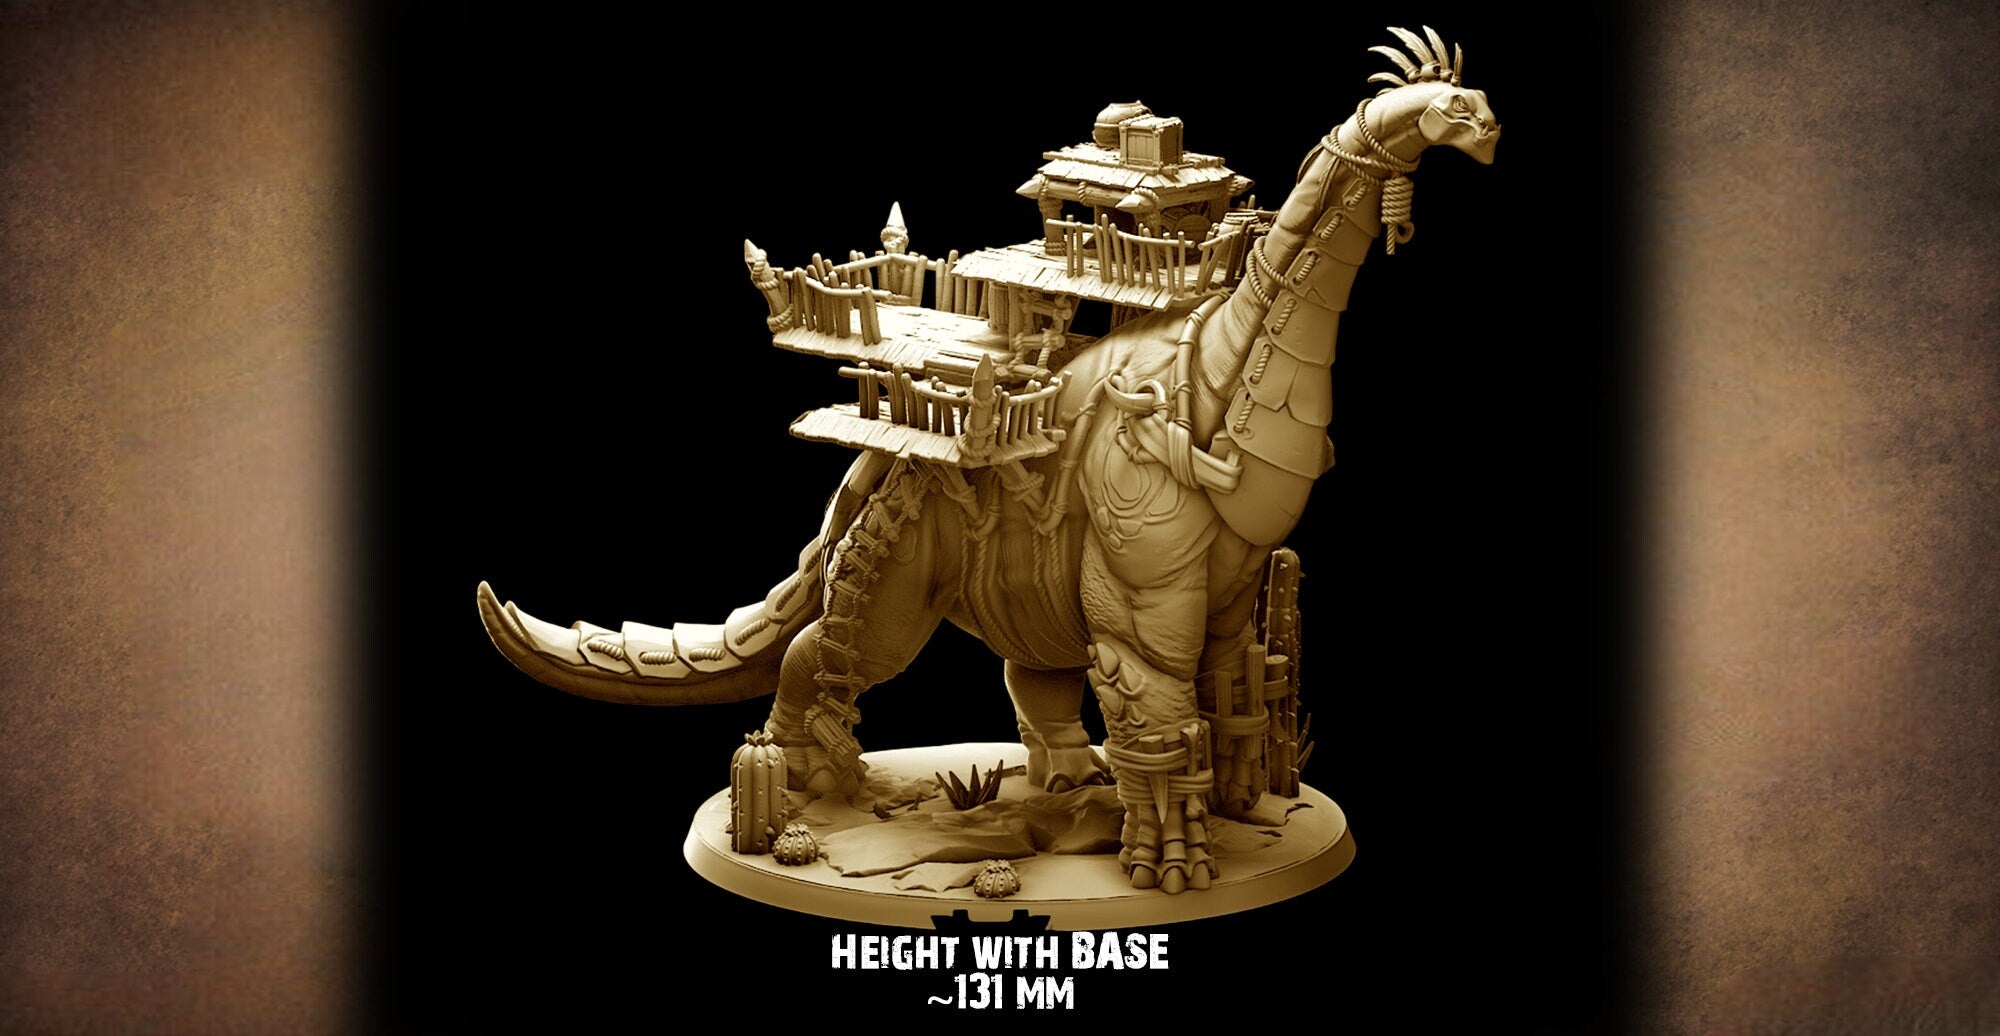 Saurian Lizardmen "Saurian Bulkhauler" | 8K 3D Print | Dungeons and Dragons | DnD | Pathfinder | Tabletop | Hero Size | 28-32 mm-Role Playing Miniatures